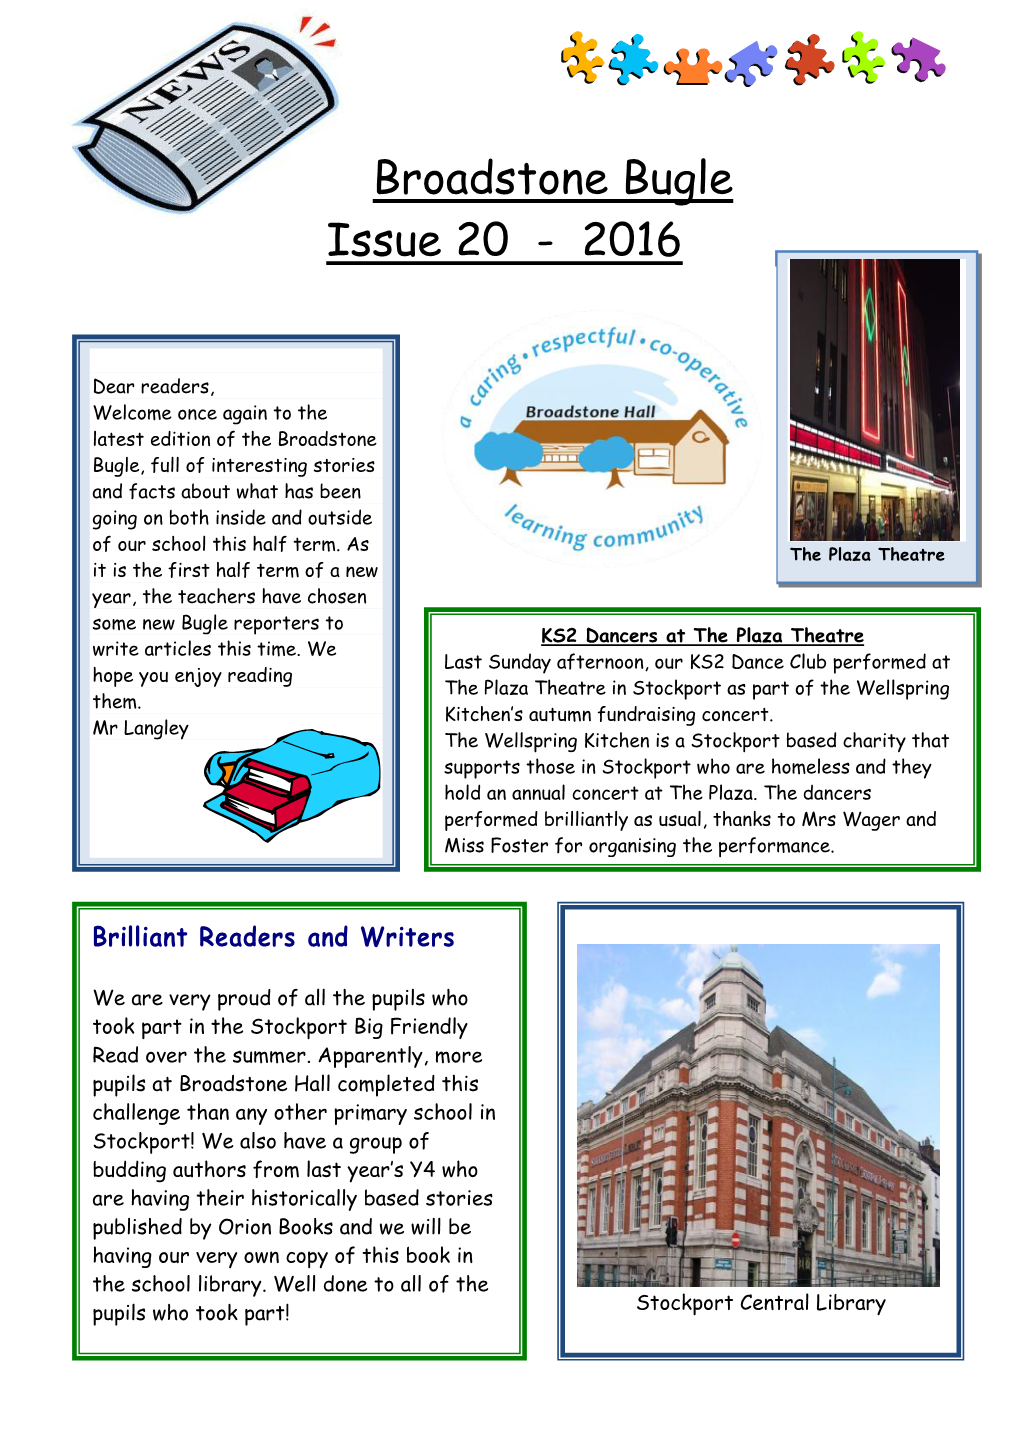 Broadstone Bugle Issue 20 - 2016